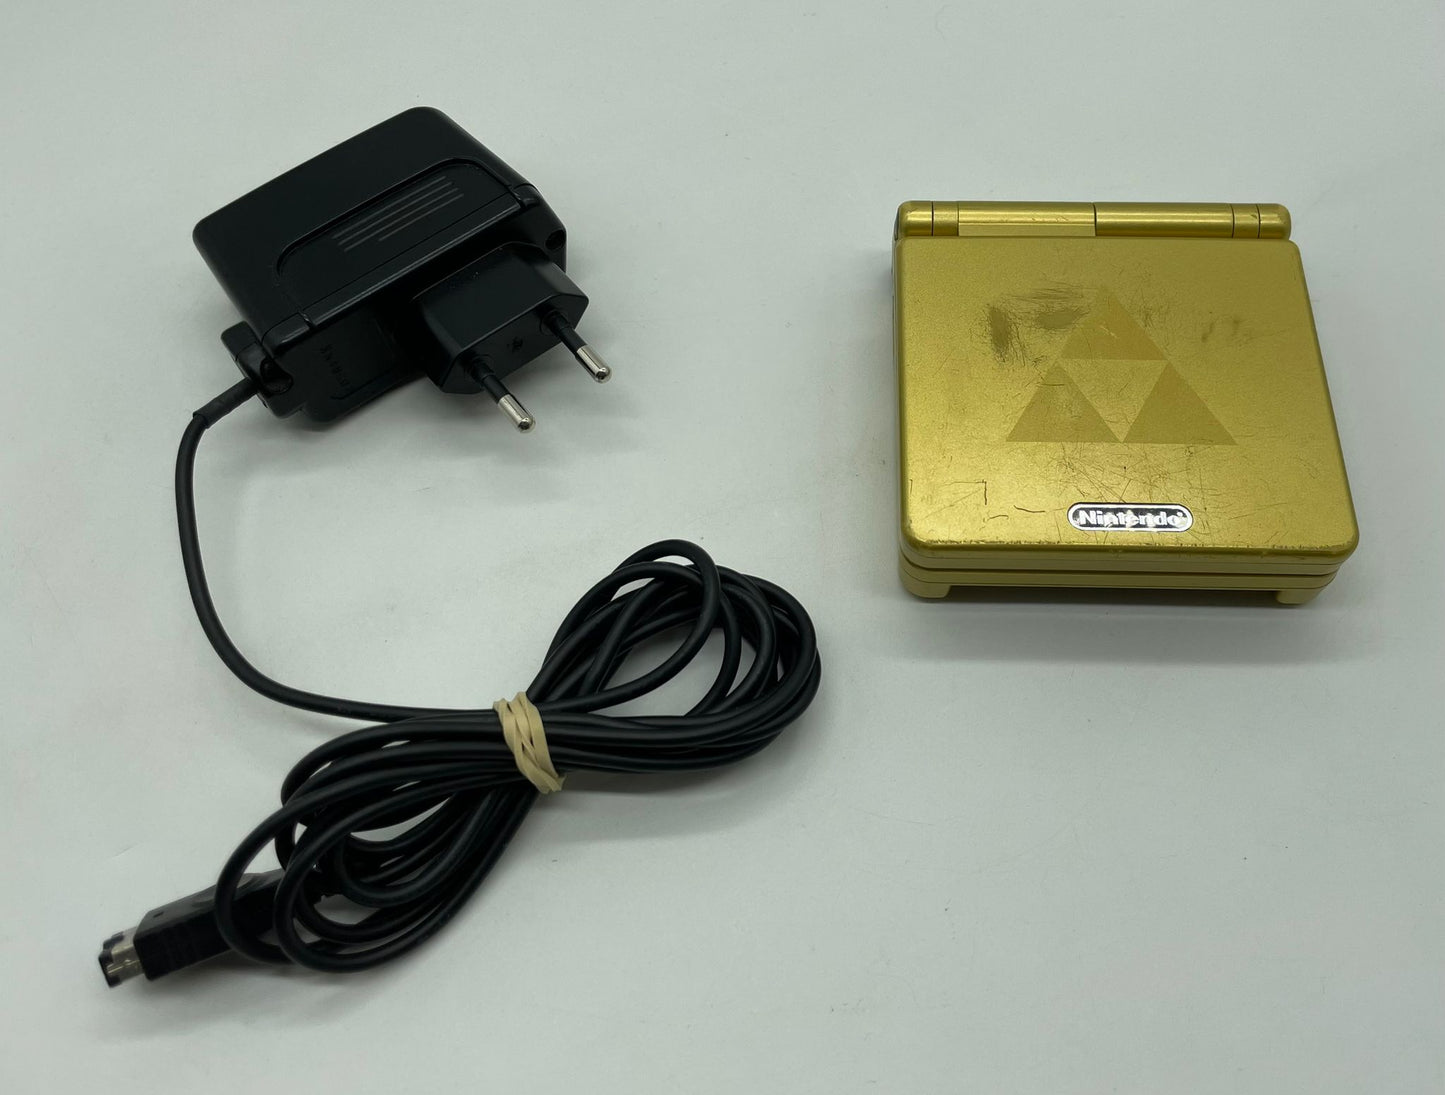 Game Boy Advance SP Zelda Limited Edition